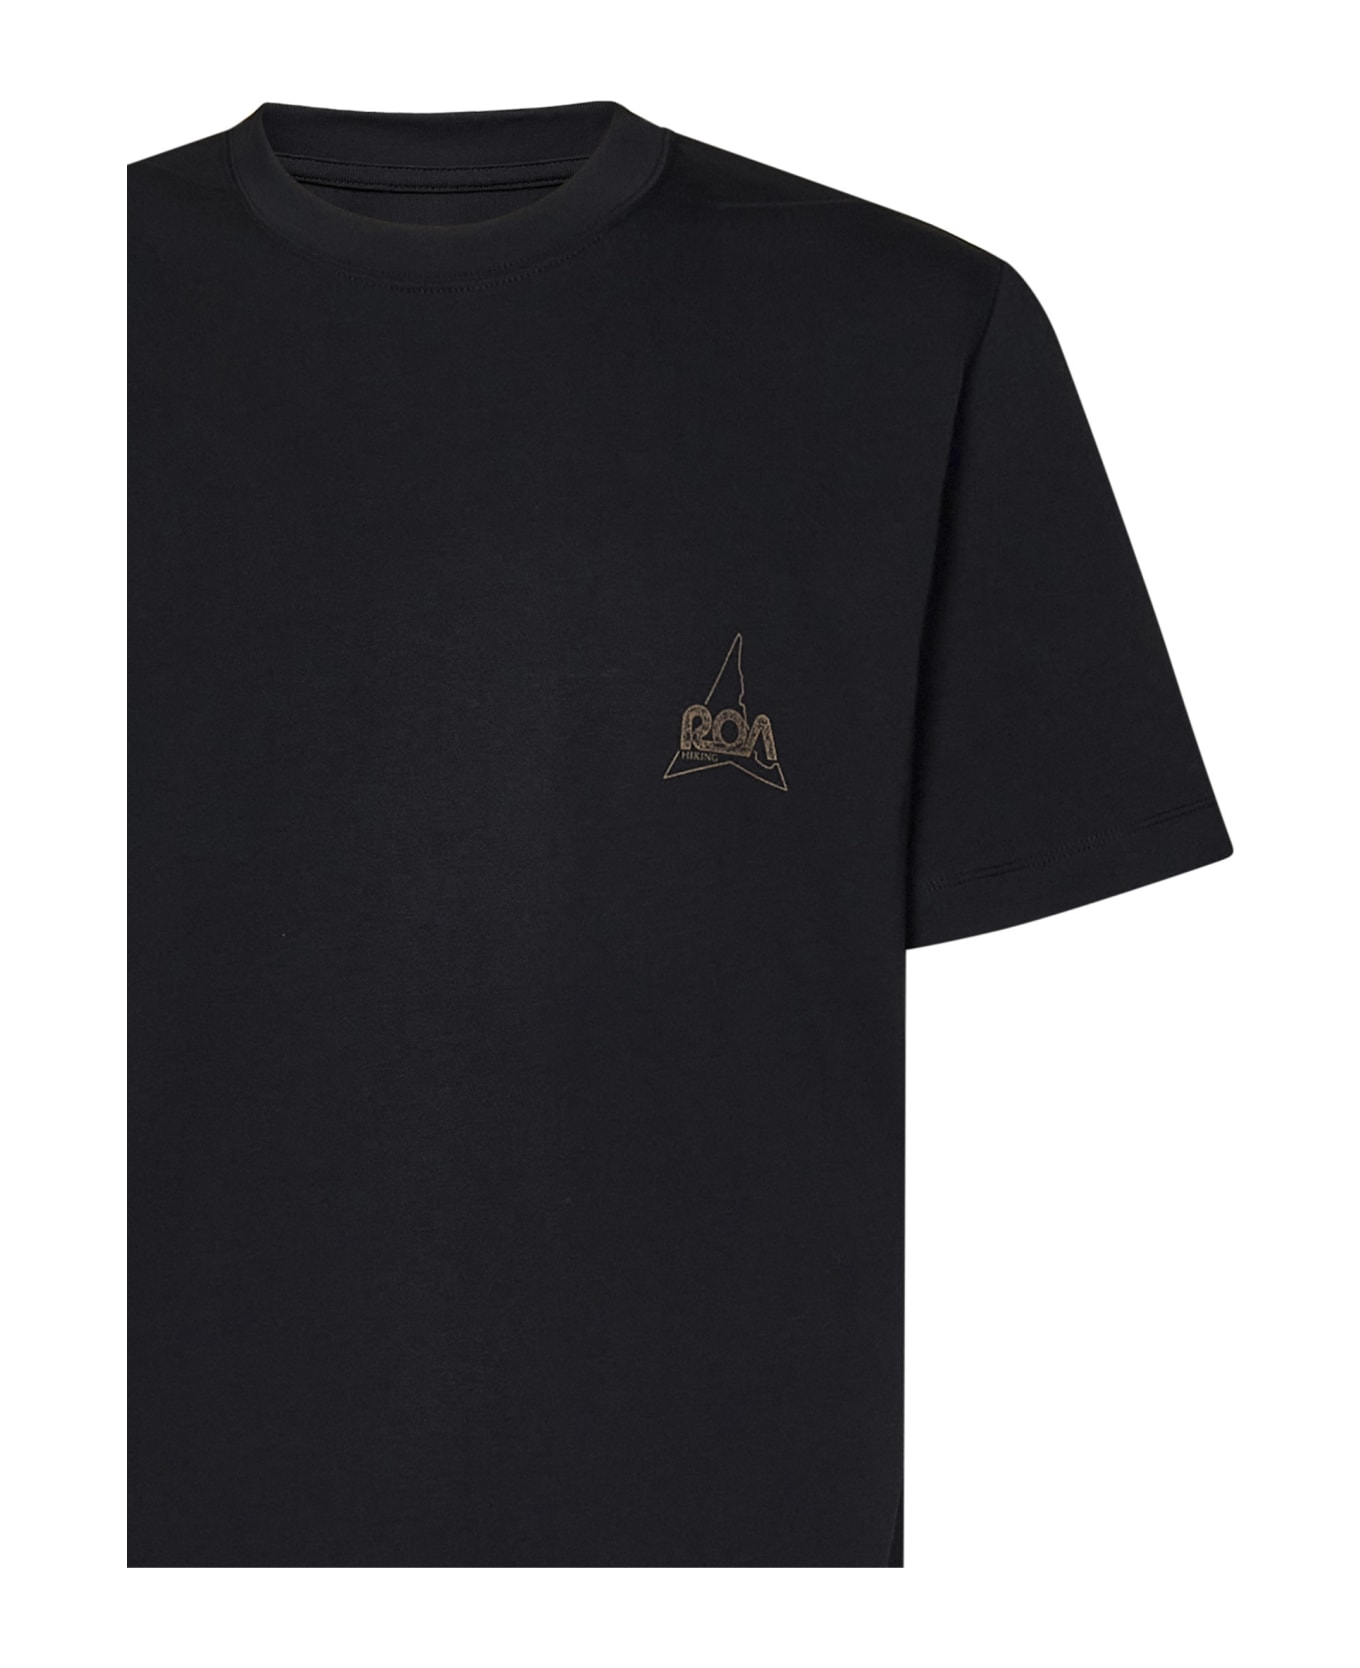 ROA T-shirt - Black シャツ